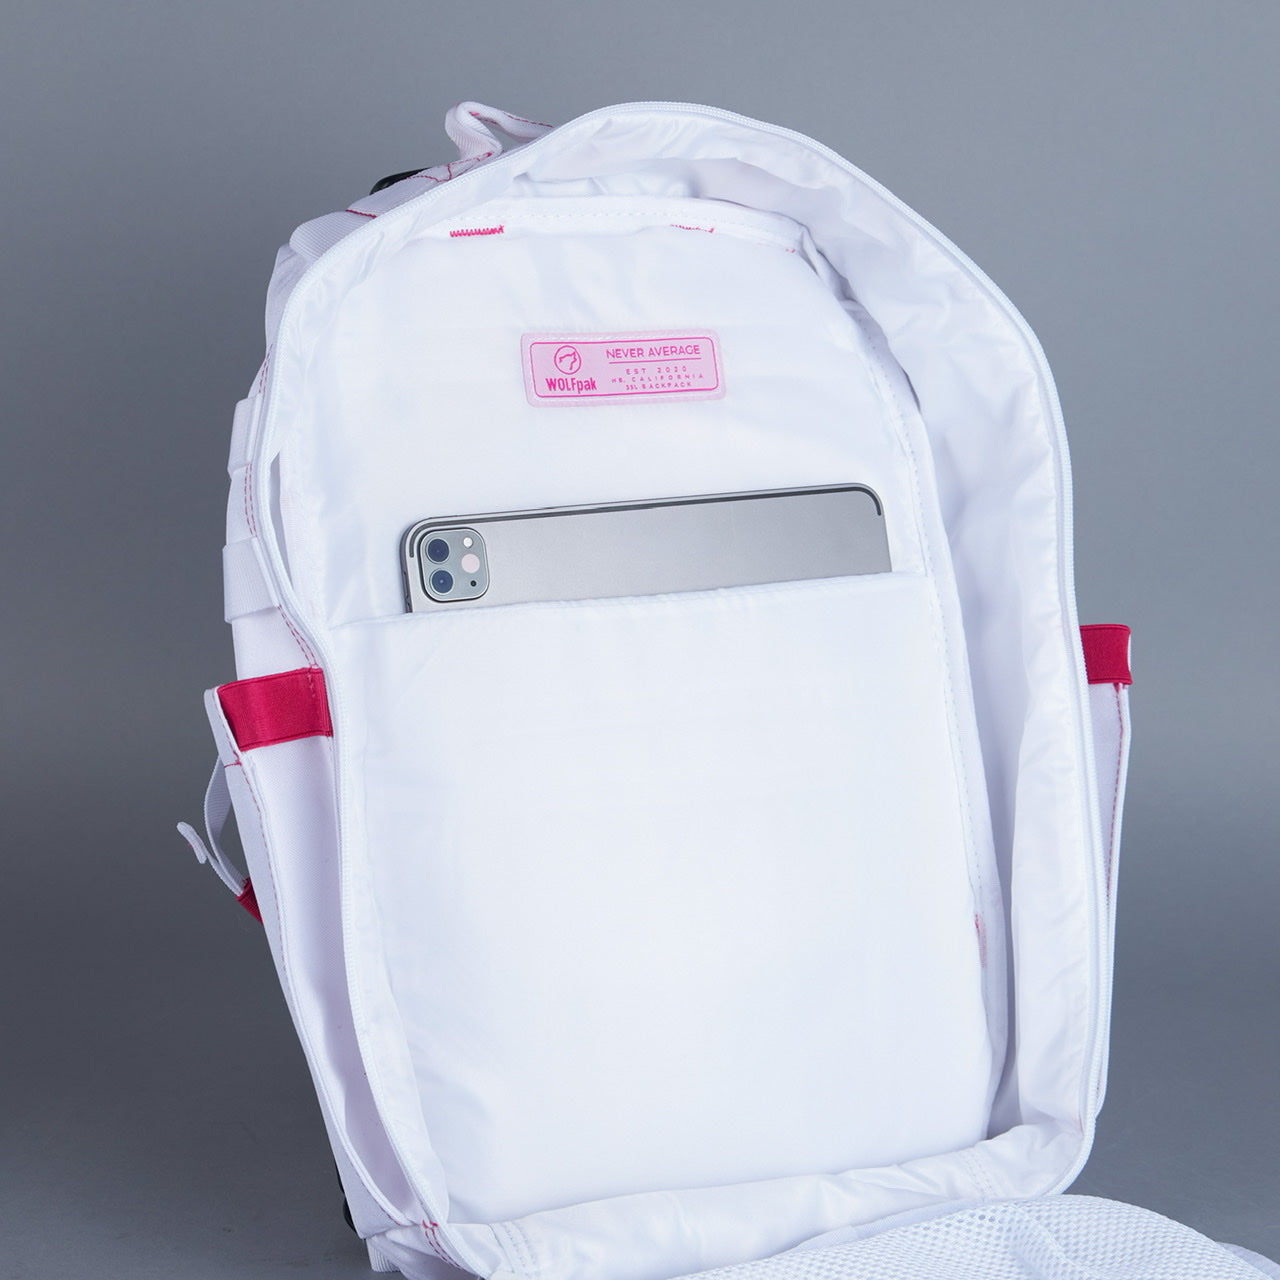 35L Backpack Dream Pink